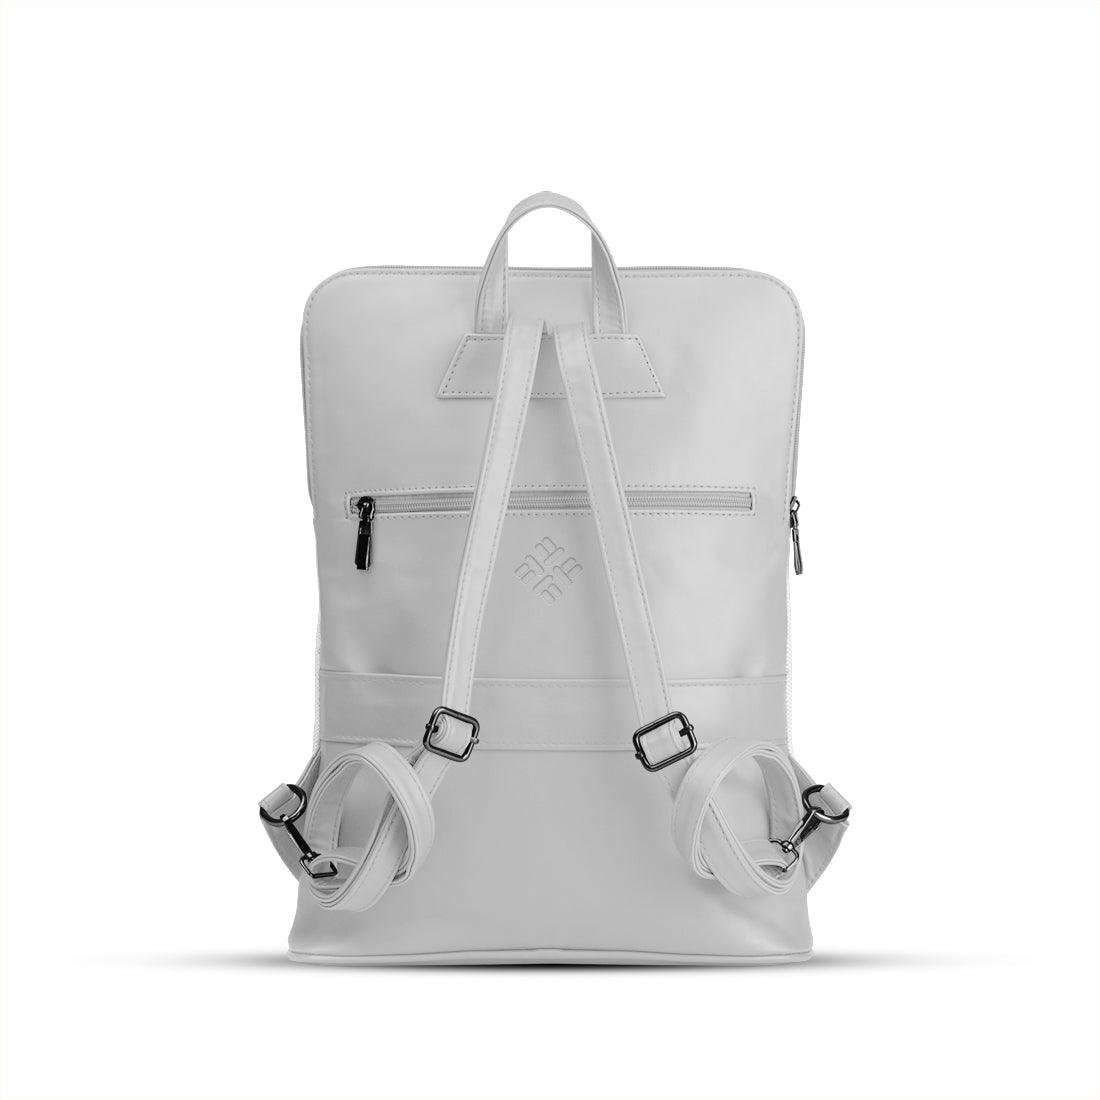 White Orbit Laptop Backpack Cute Bird - CANVAEGYPT